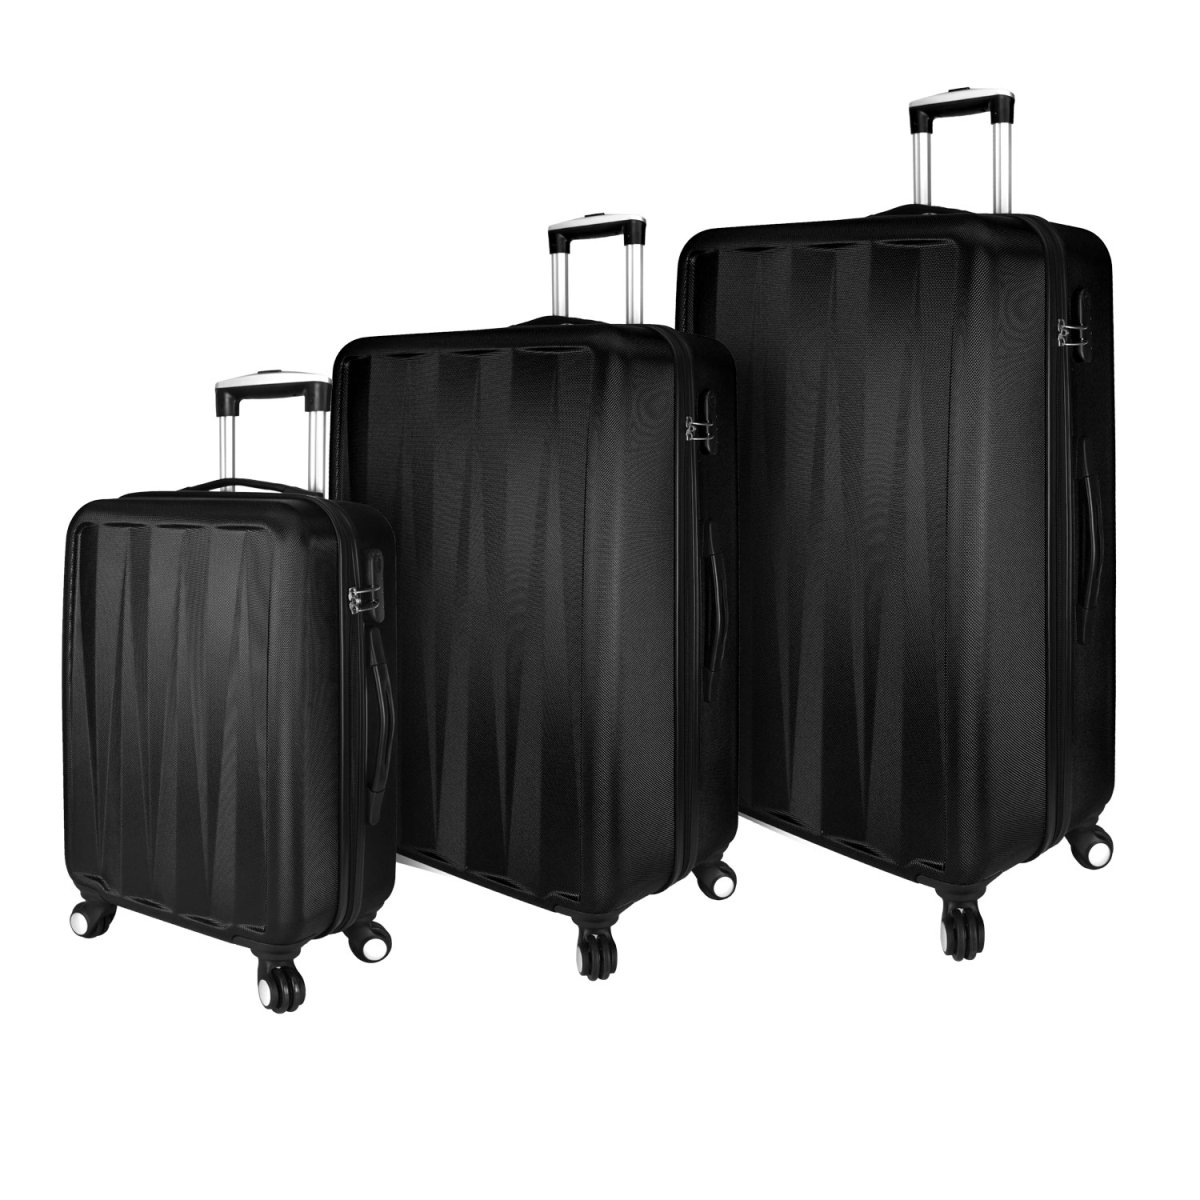 El09078k Verdugo Hardside 3 Piece Spinner Luggage Set, Black